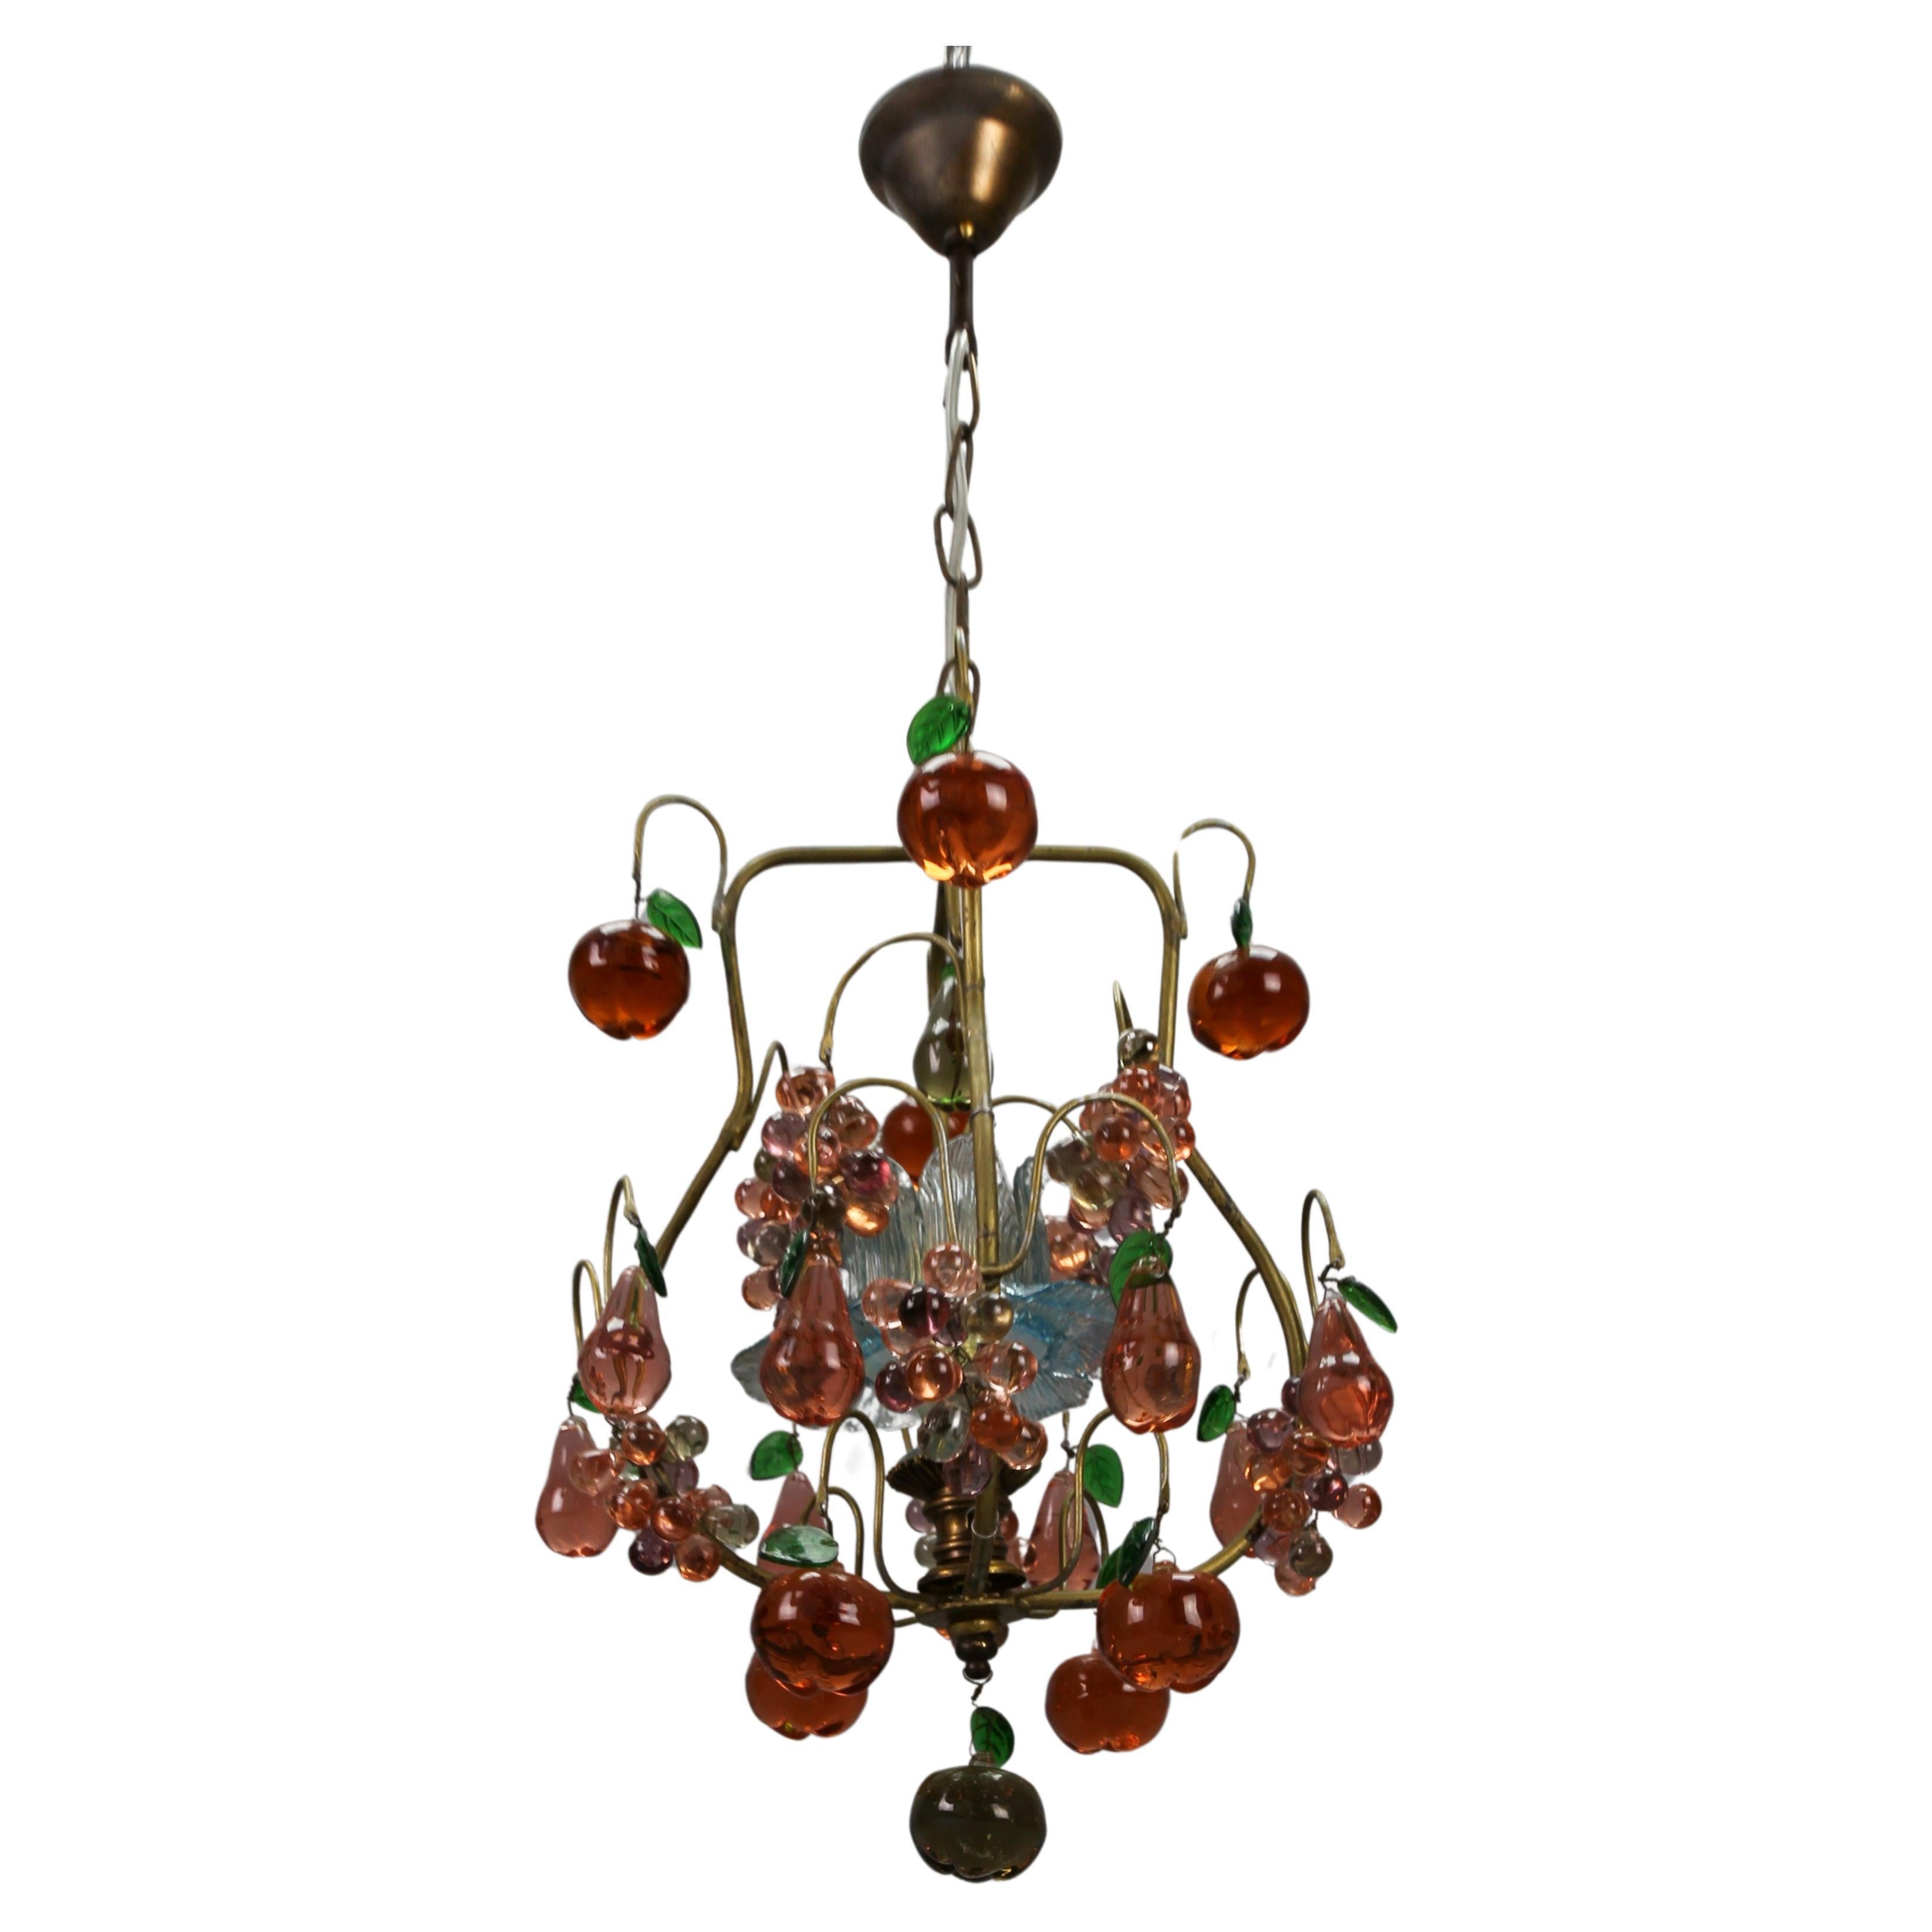 Italian Venetian Pendant Chandelier with Murano Glass Fruits, 1950s For Sale